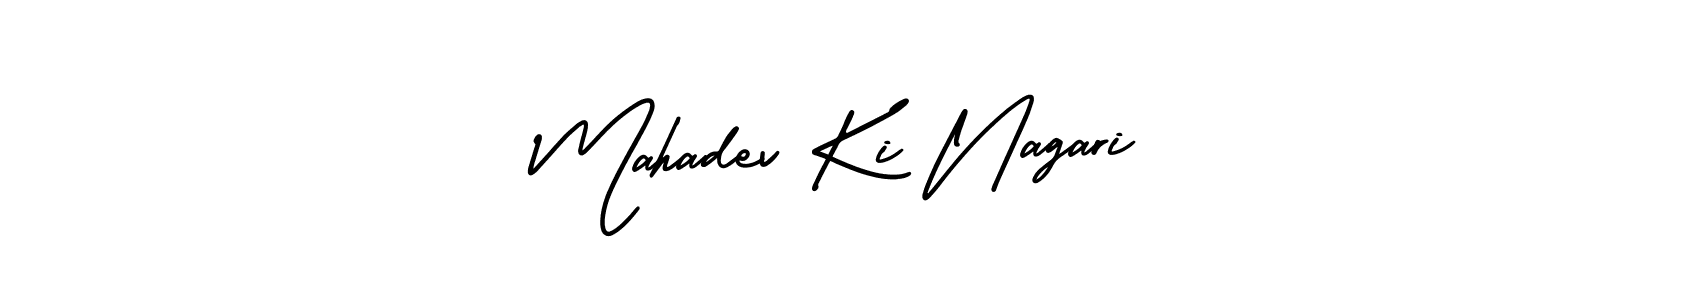 How to Draw Mahadev Ki Nagari signature style? AmerikaSignatureDemo-Regular is a latest design signature styles for name Mahadev Ki Nagari. Mahadev Ki Nagari signature style 3 images and pictures png